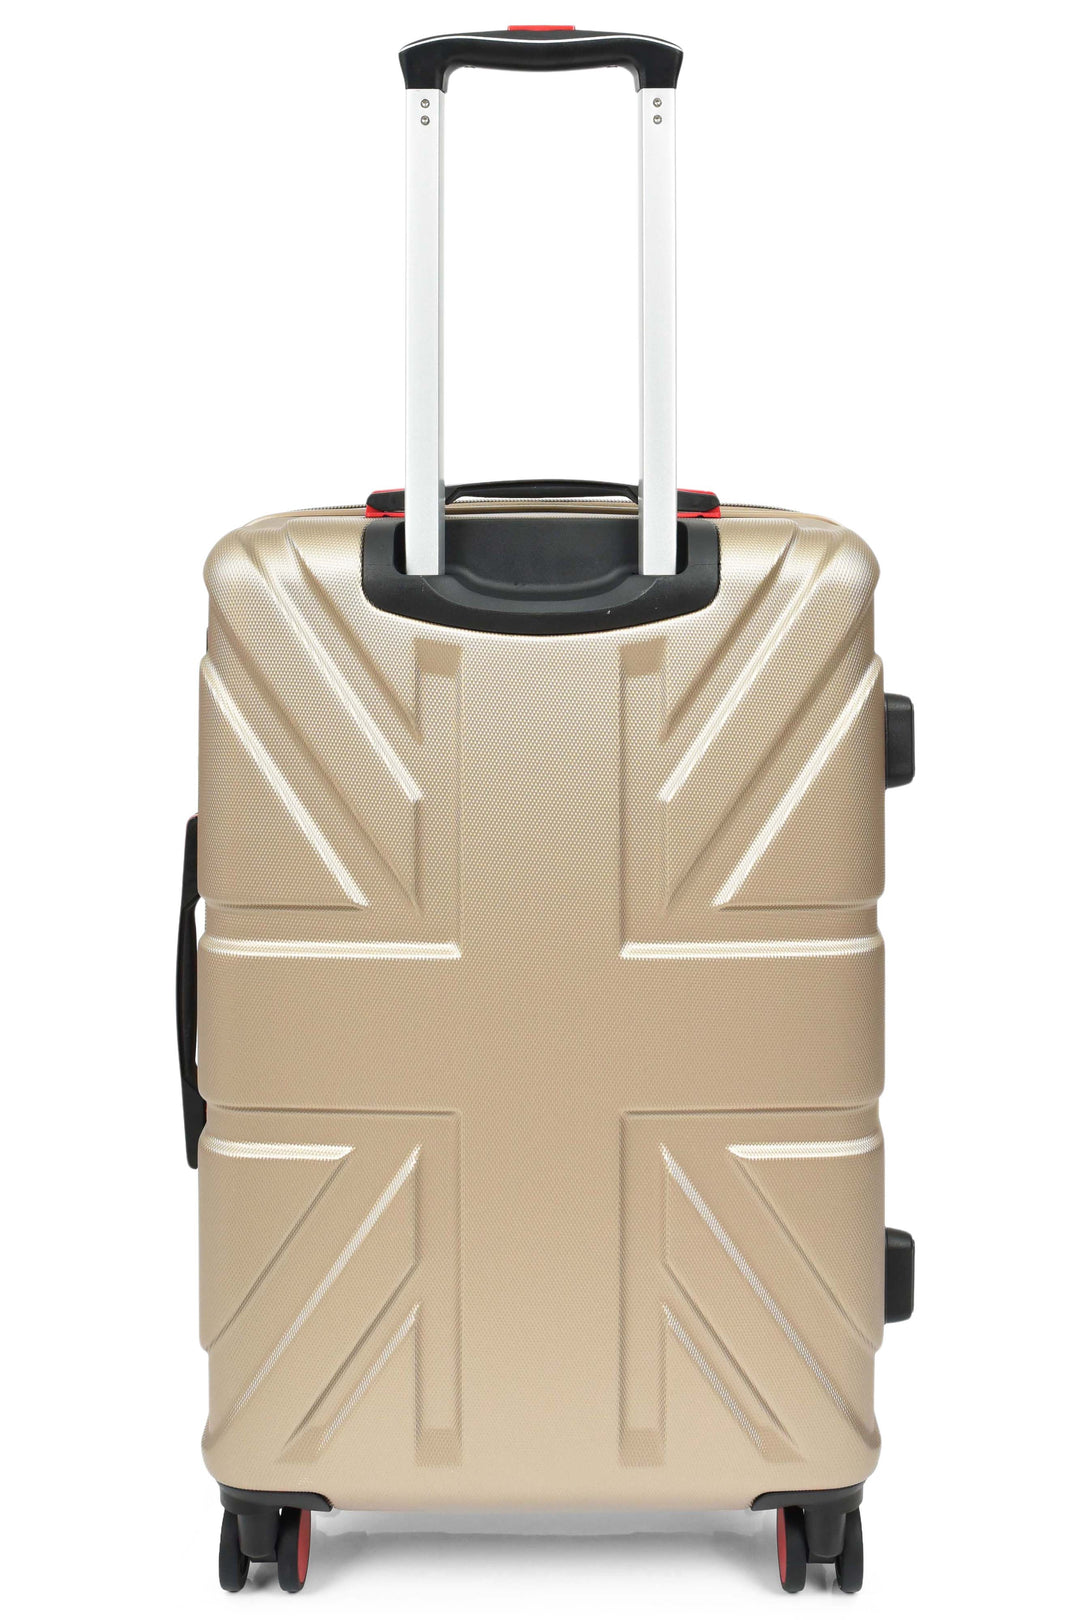 Lee Cooper Union Jack Suitcase 9